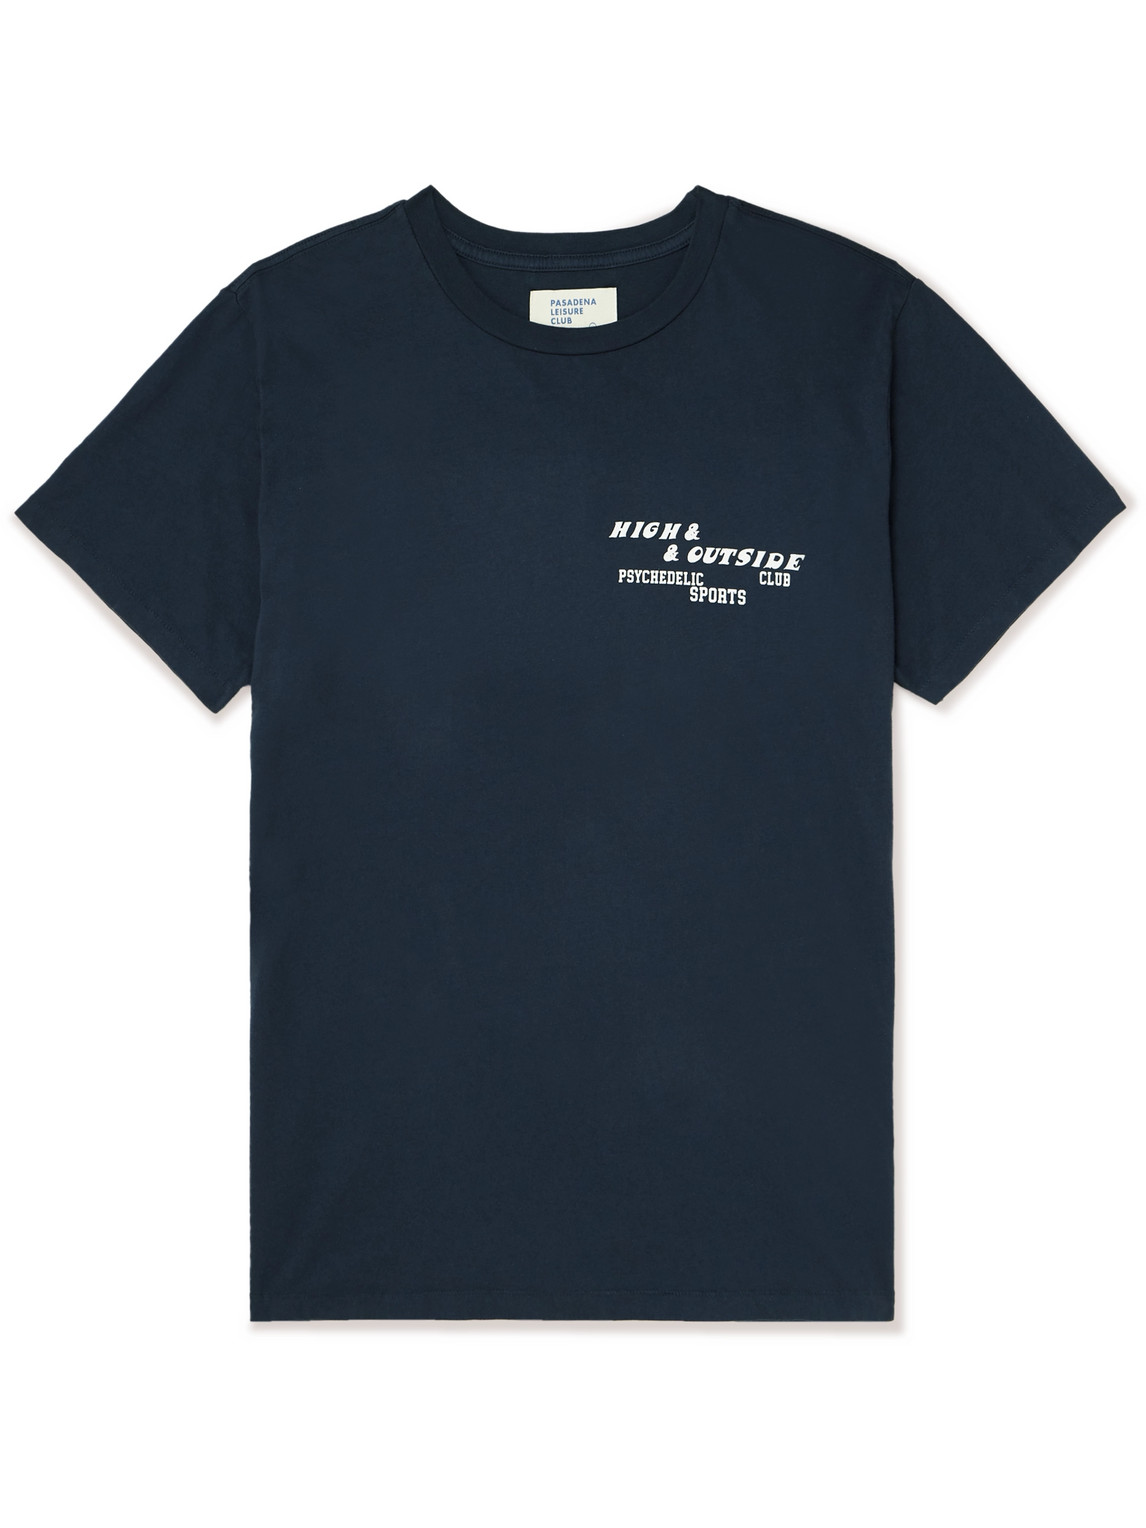 Pasadena Leisure Club Logo-print Cotton-jersey T-shirt In Blue